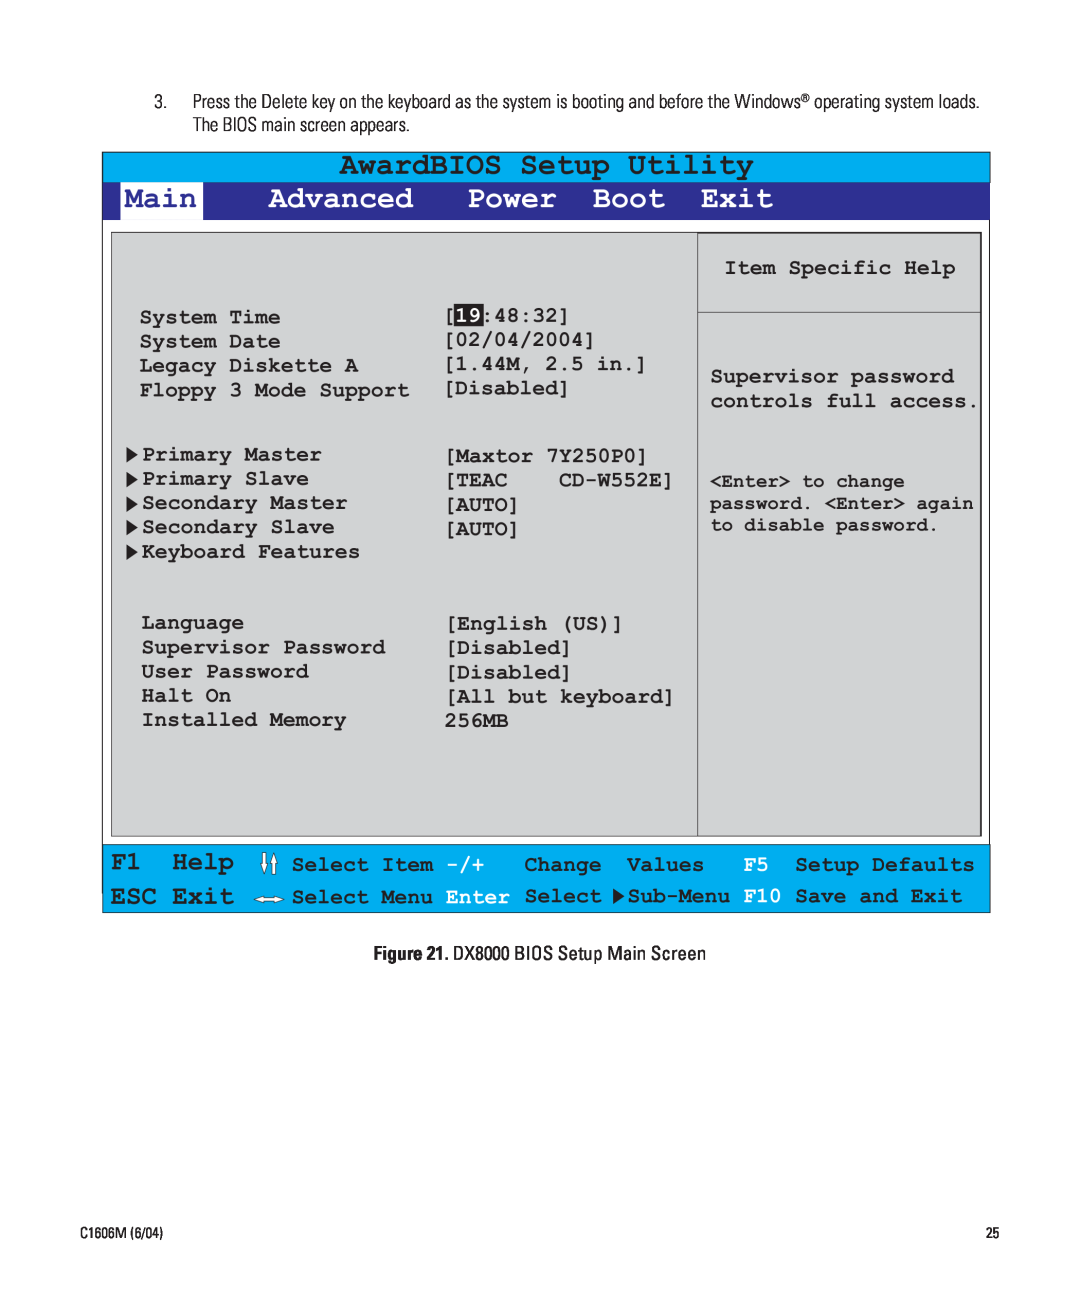 Pelco Dx8000 manual AwardBIOS Setup Utility, Main, Advanced Power Boot Exit 